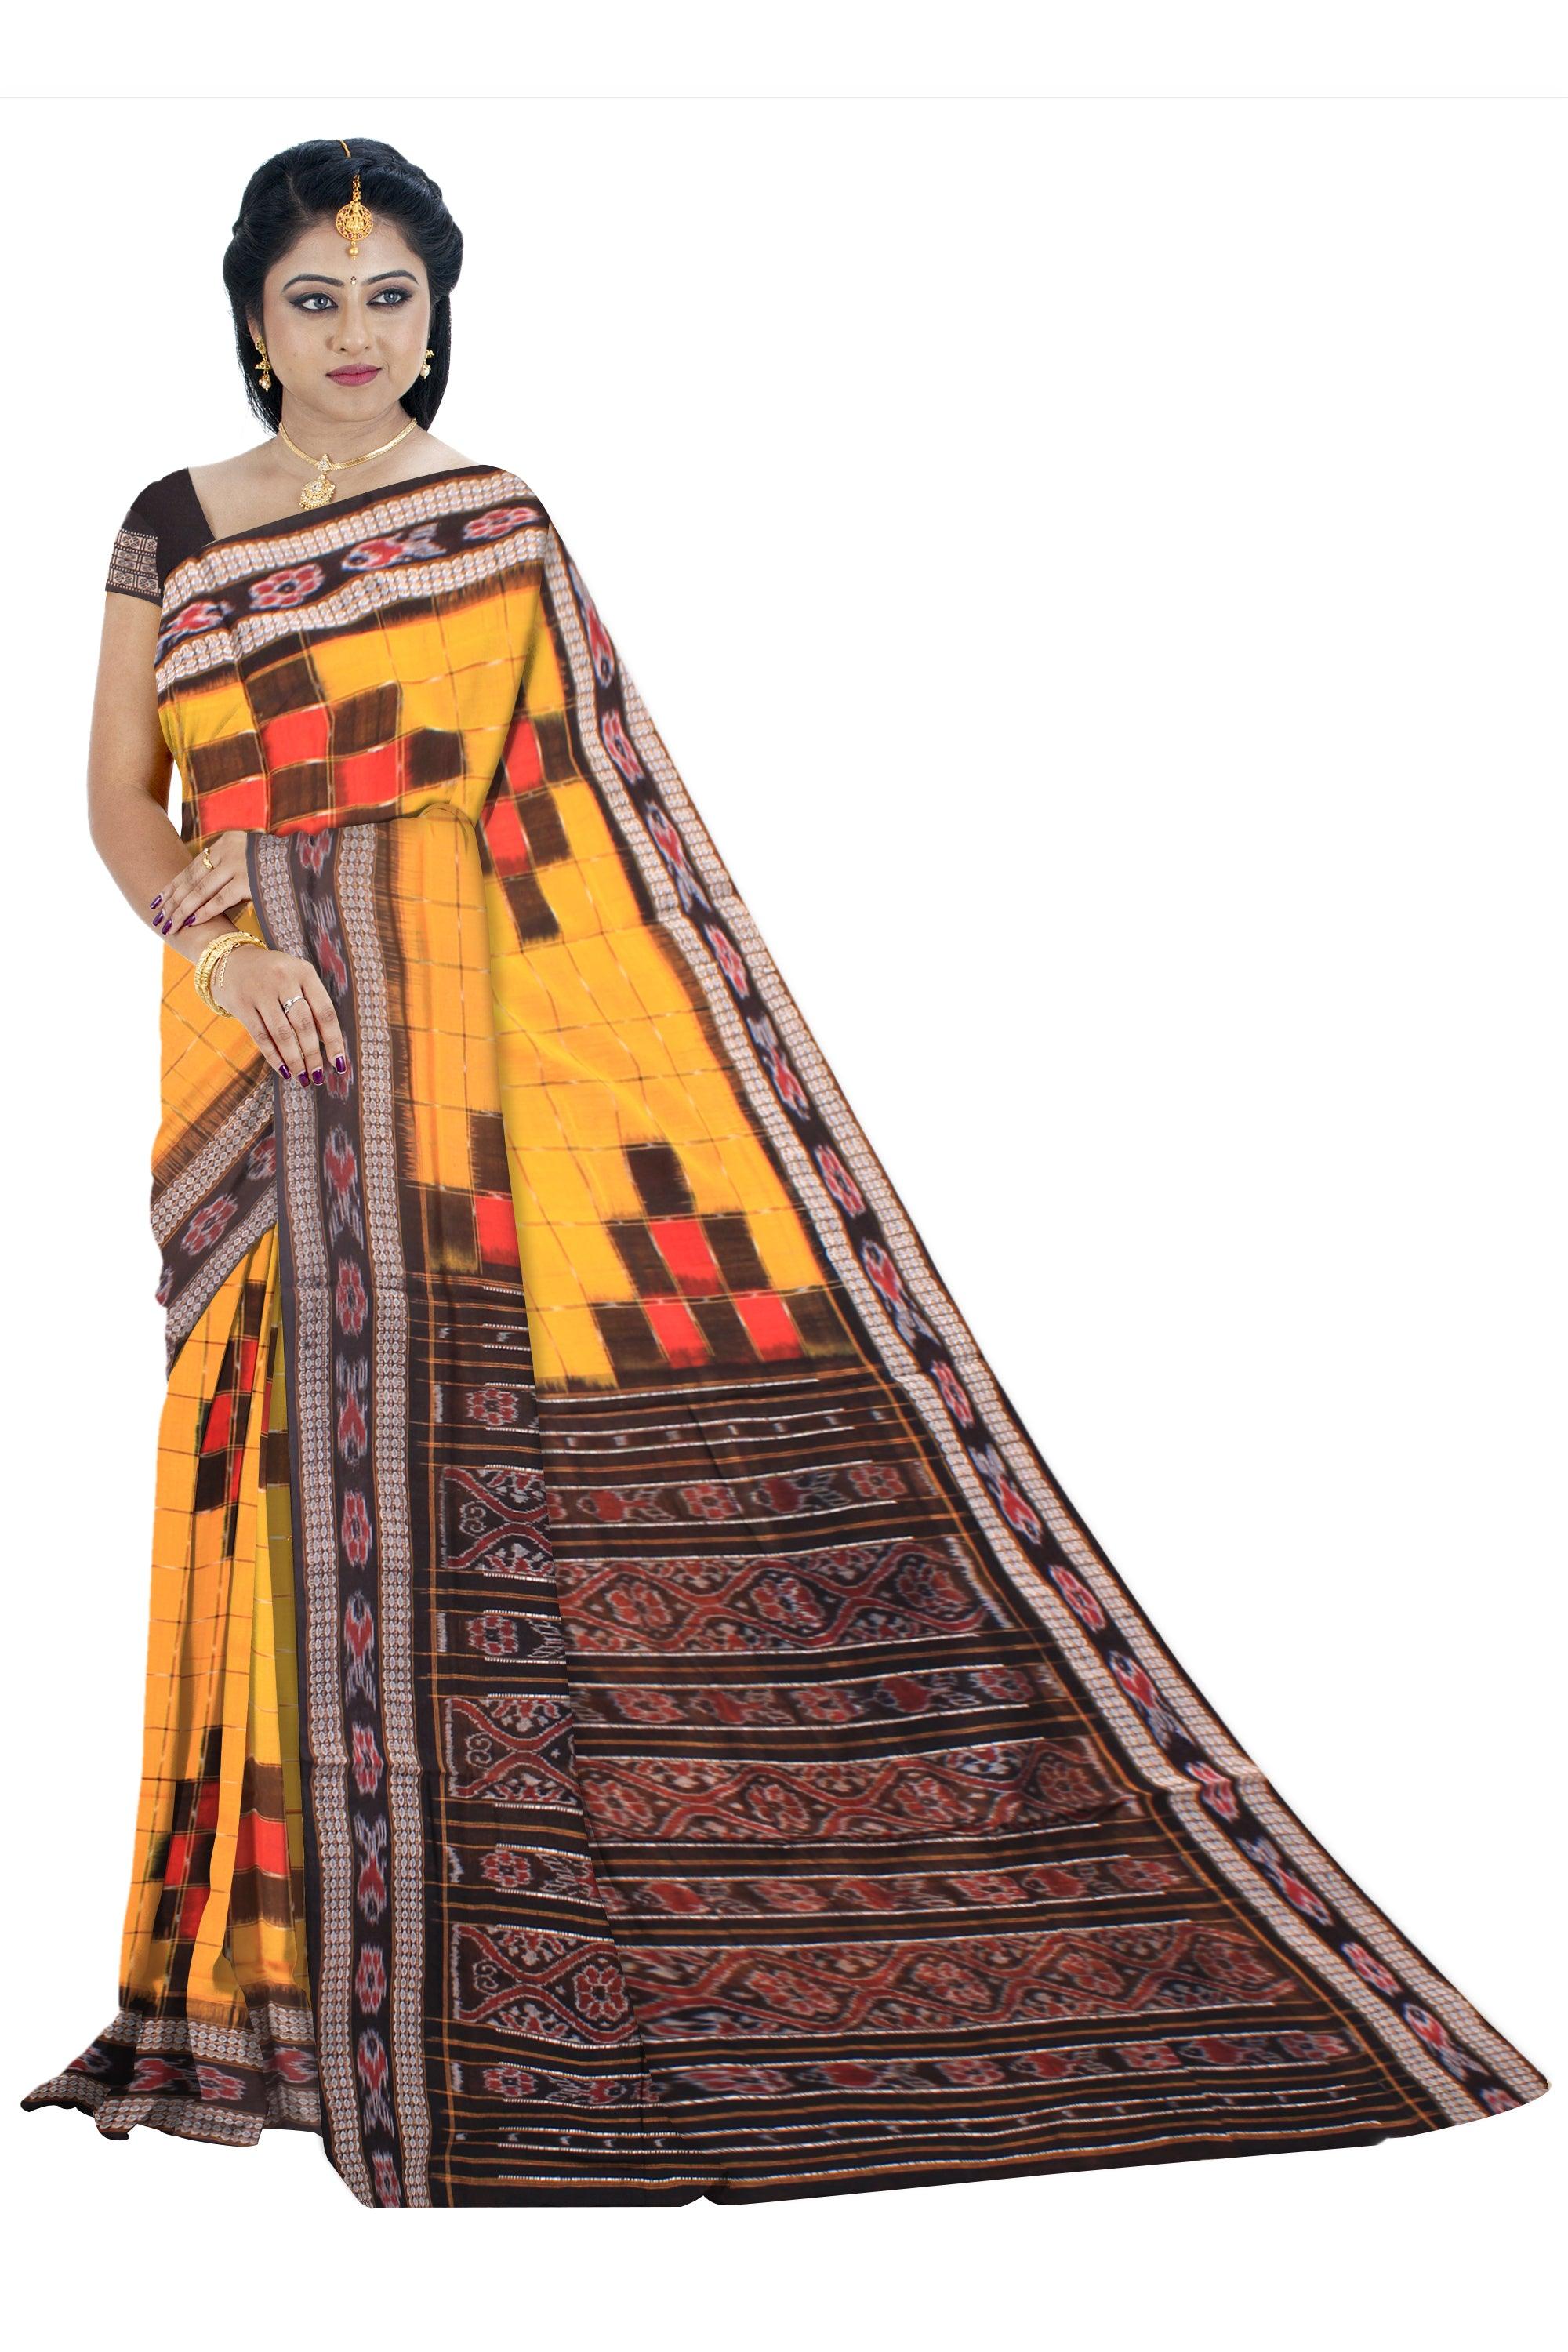 Samblpuri Sapta cotton  saree in Yellow and Black  colour border with blouse piece. - Koshali Arts & Crafts Enterprise